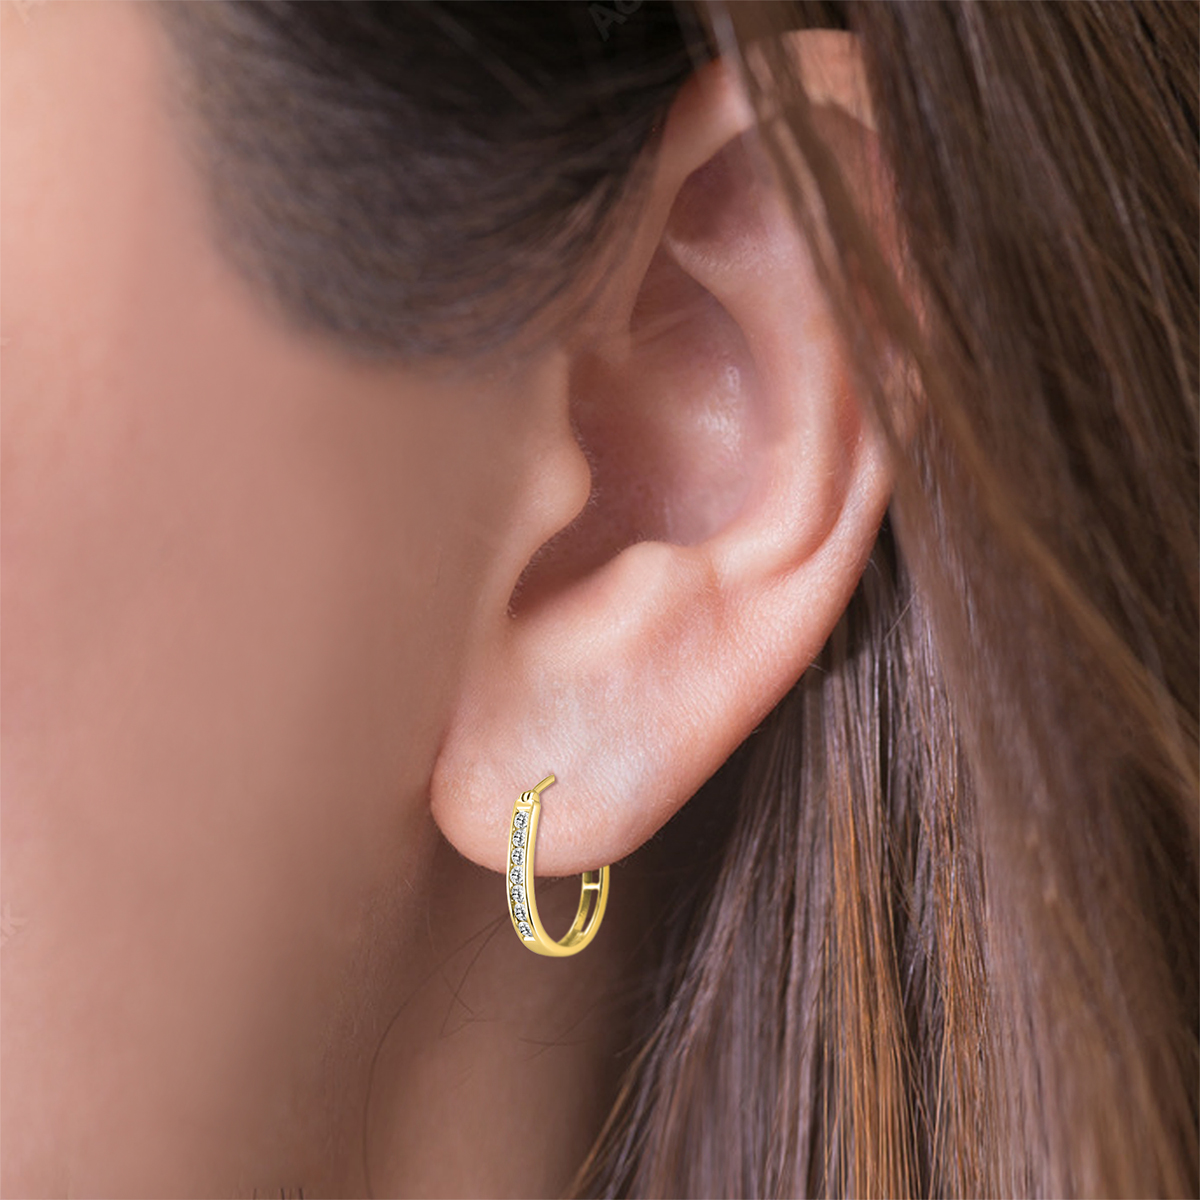 szul.com 1/2 Carat TW Diamond Hoop Earrings in 10k Yellow Gold